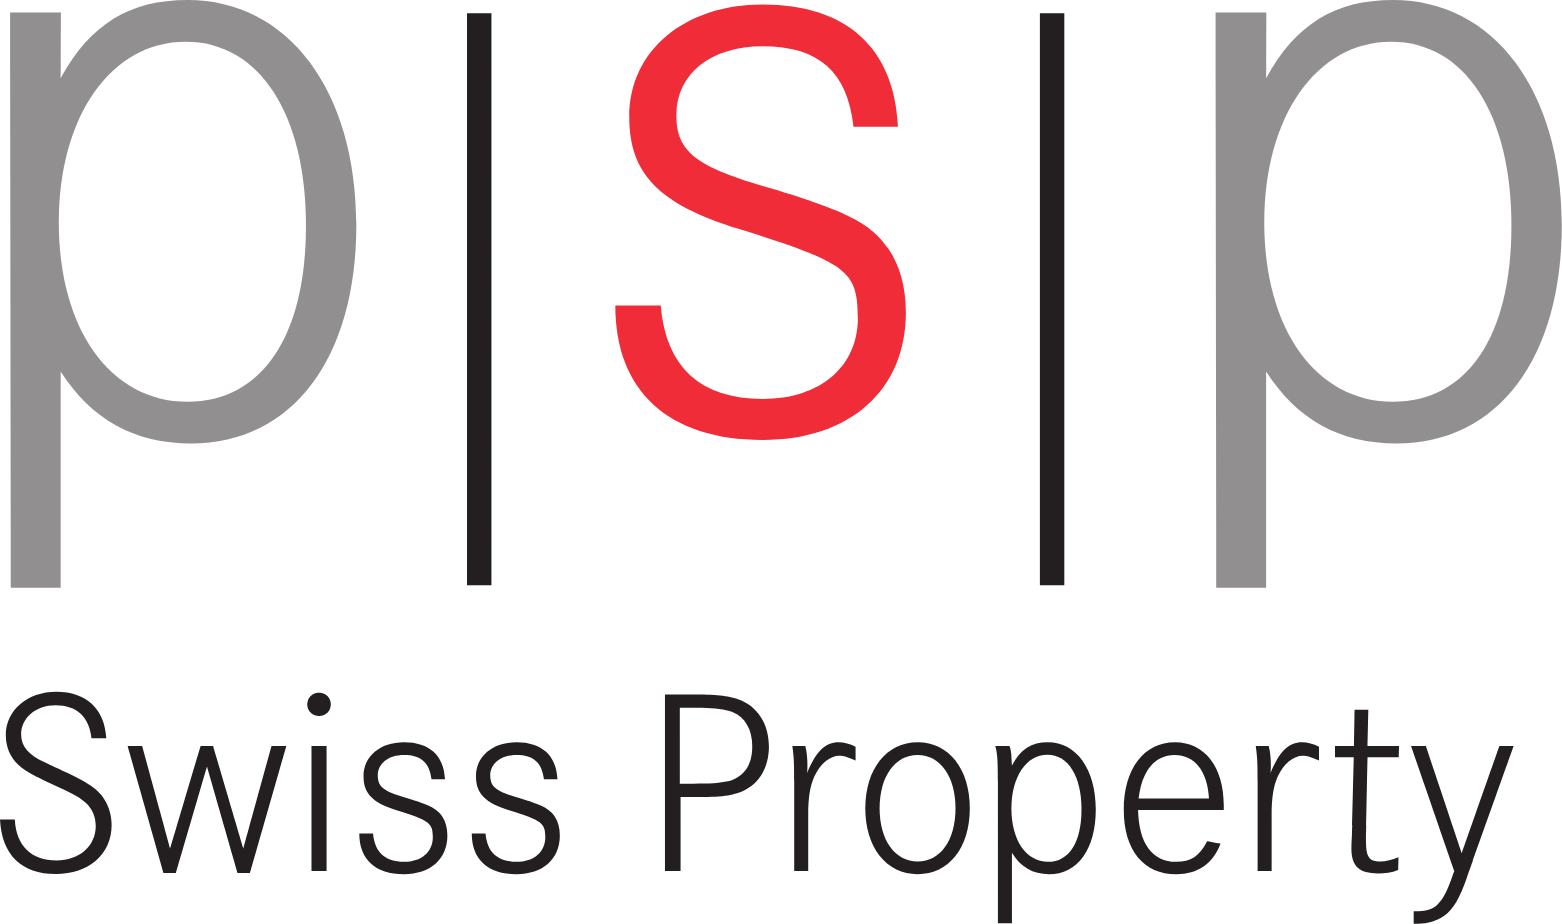 PSP Swiss Property logo large (transparent PNG)